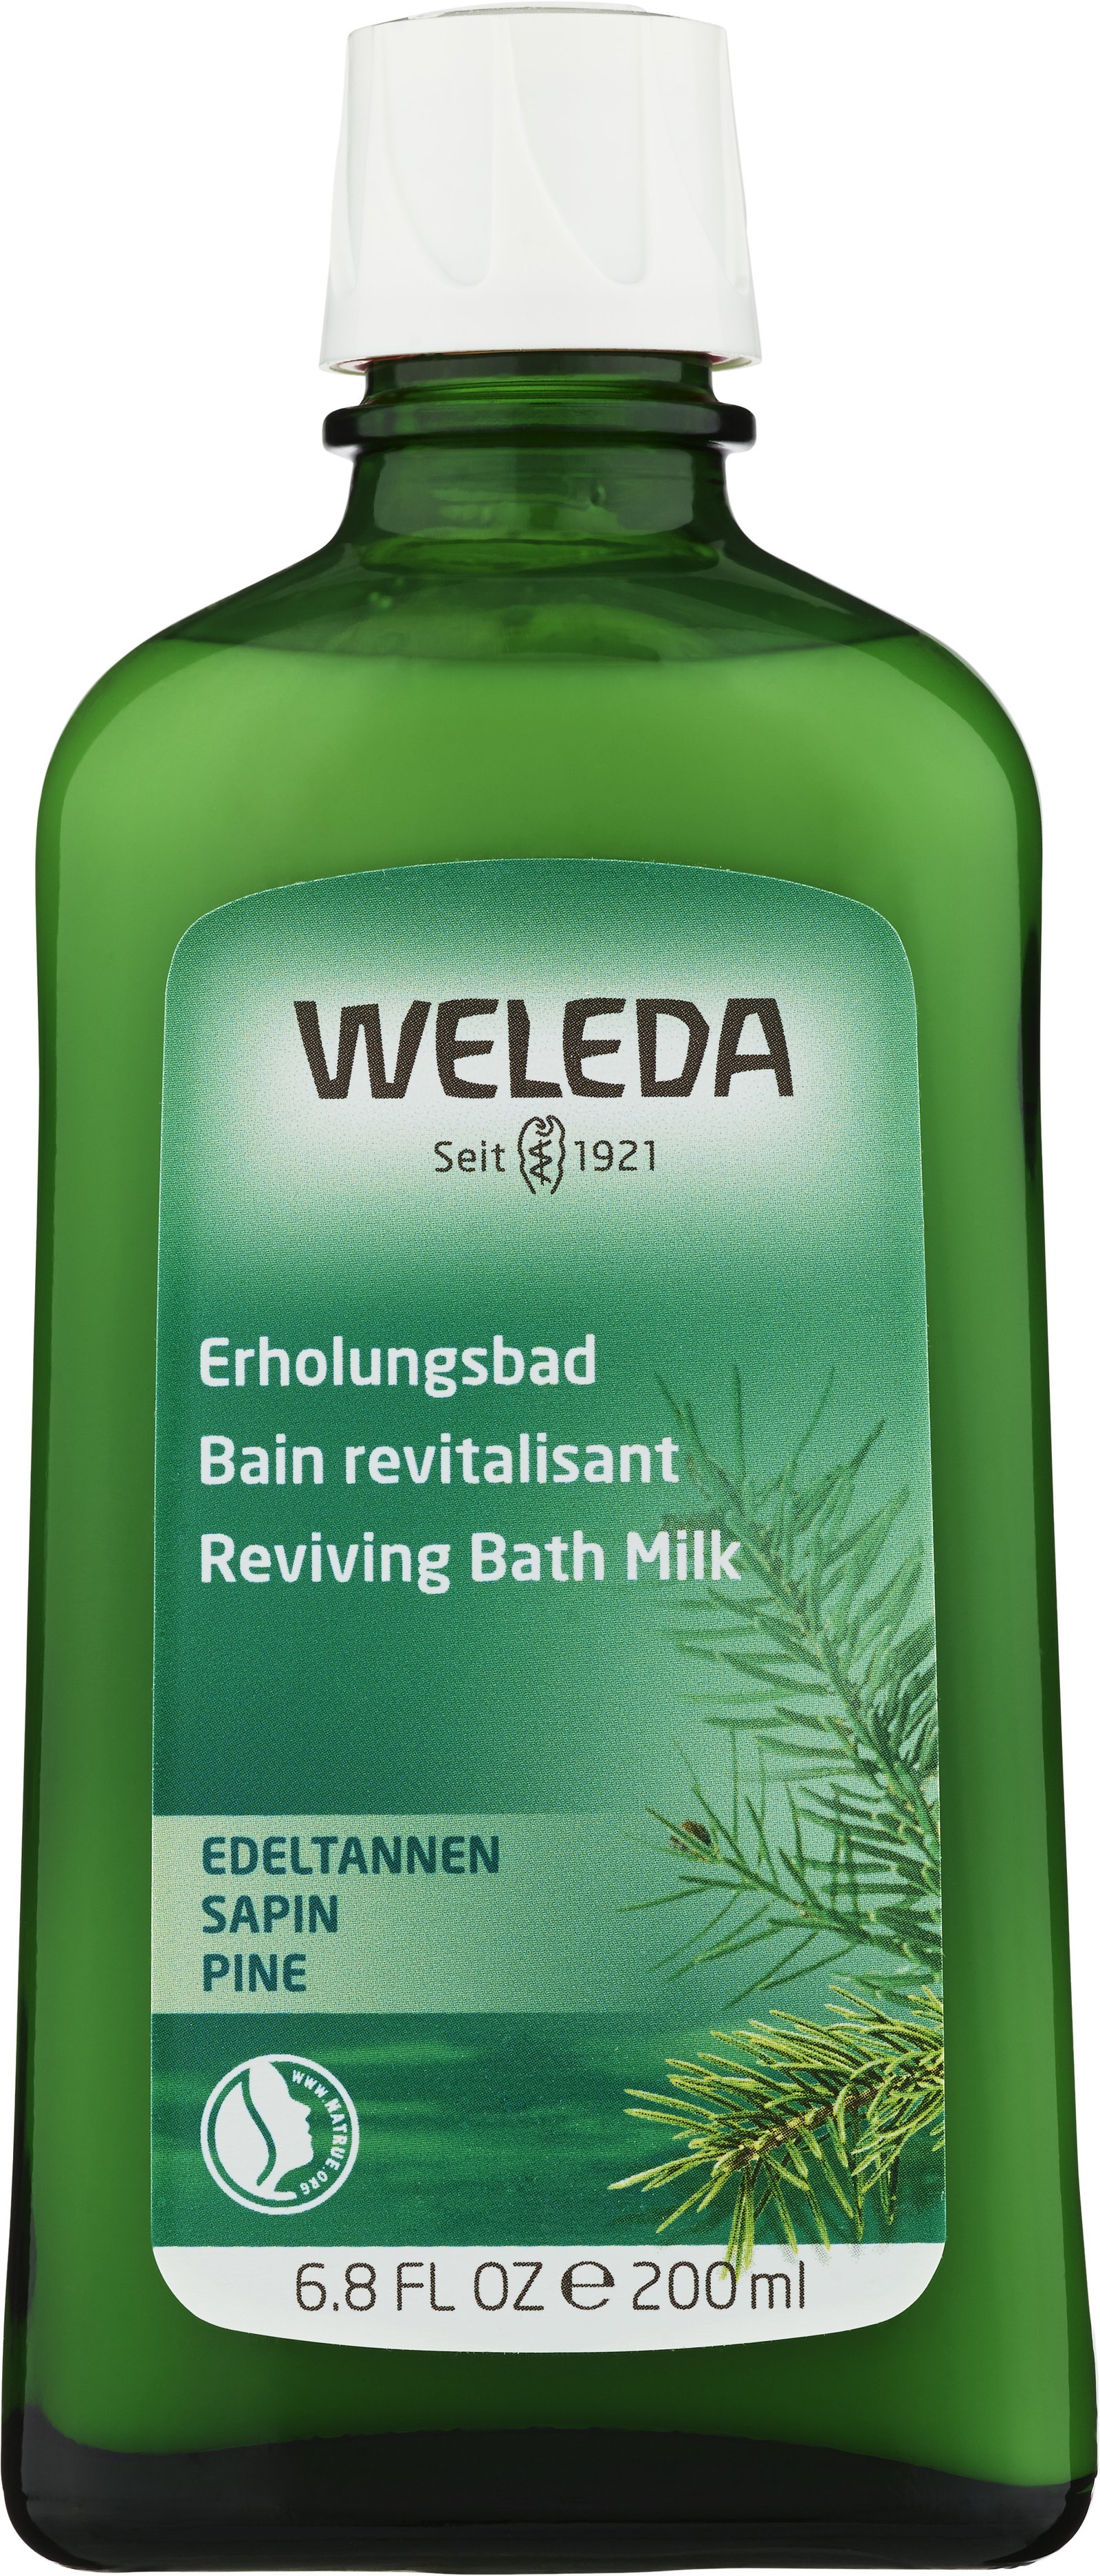 Weleda Pine Reviving Bath Milk